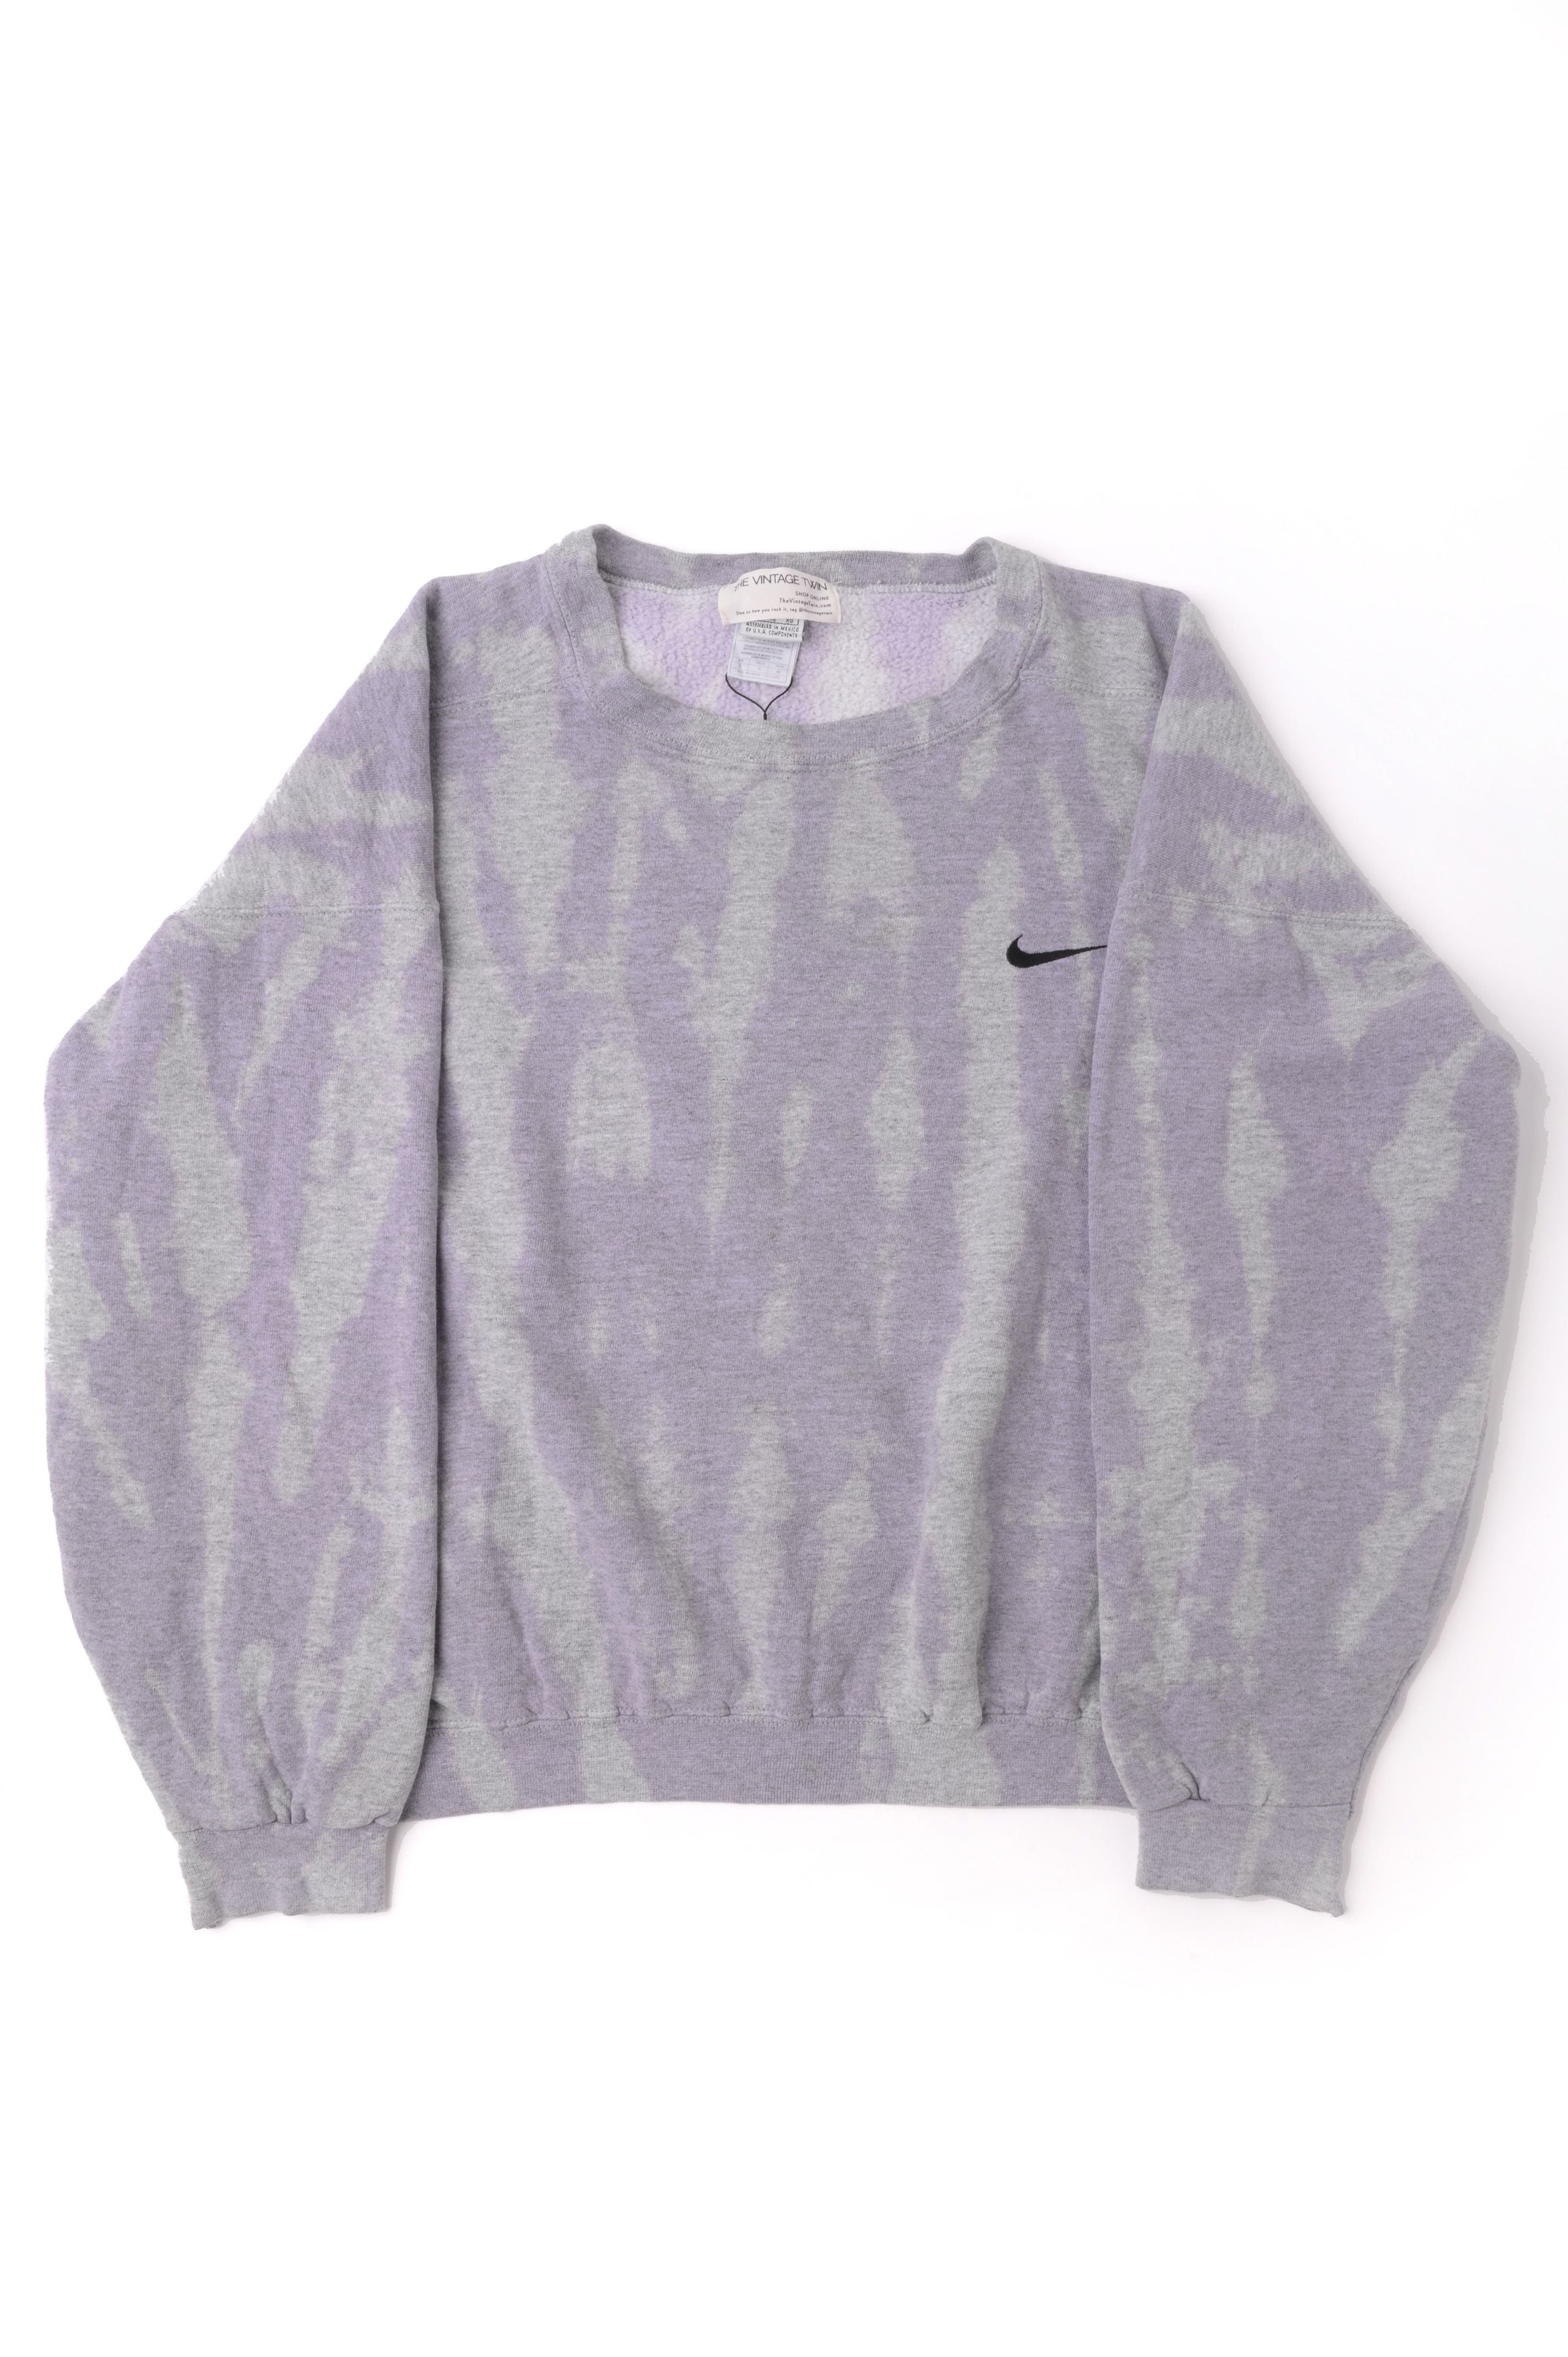 Nike Tie Dye Sweatshirt – The Vintage Twin